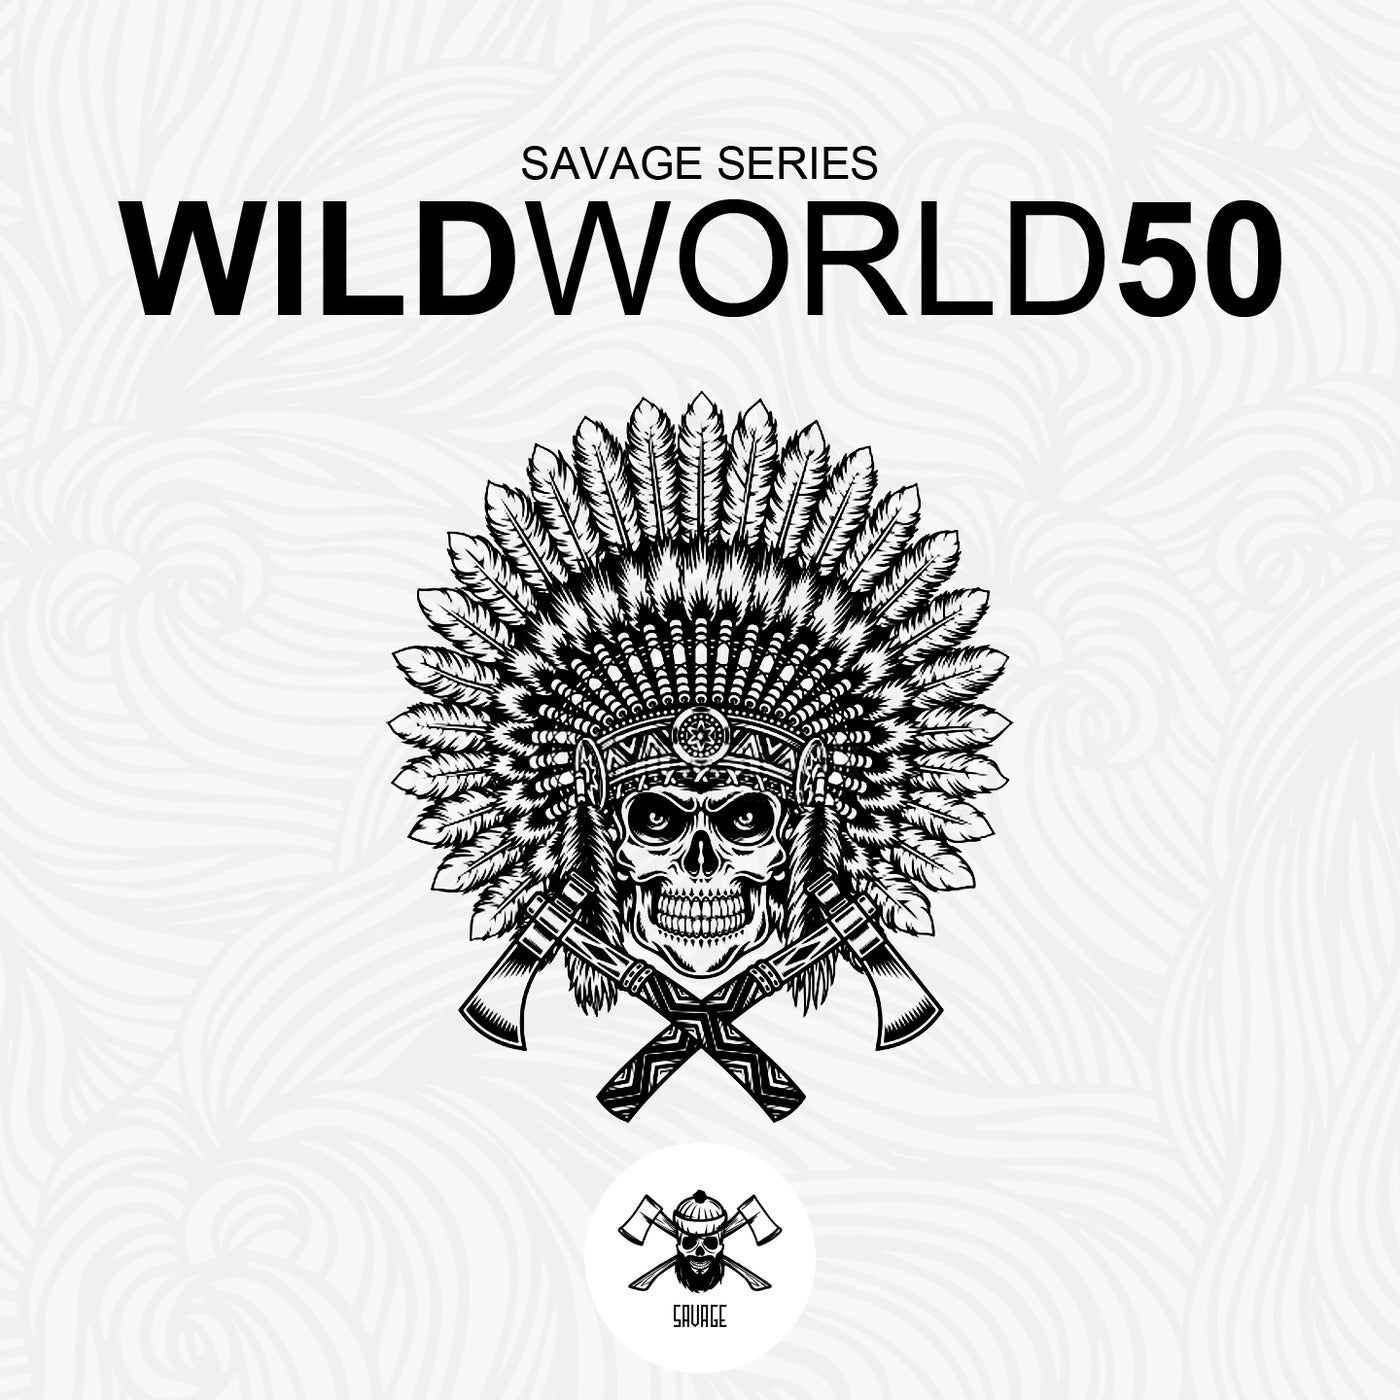 Wildworld50 (Savage Series)